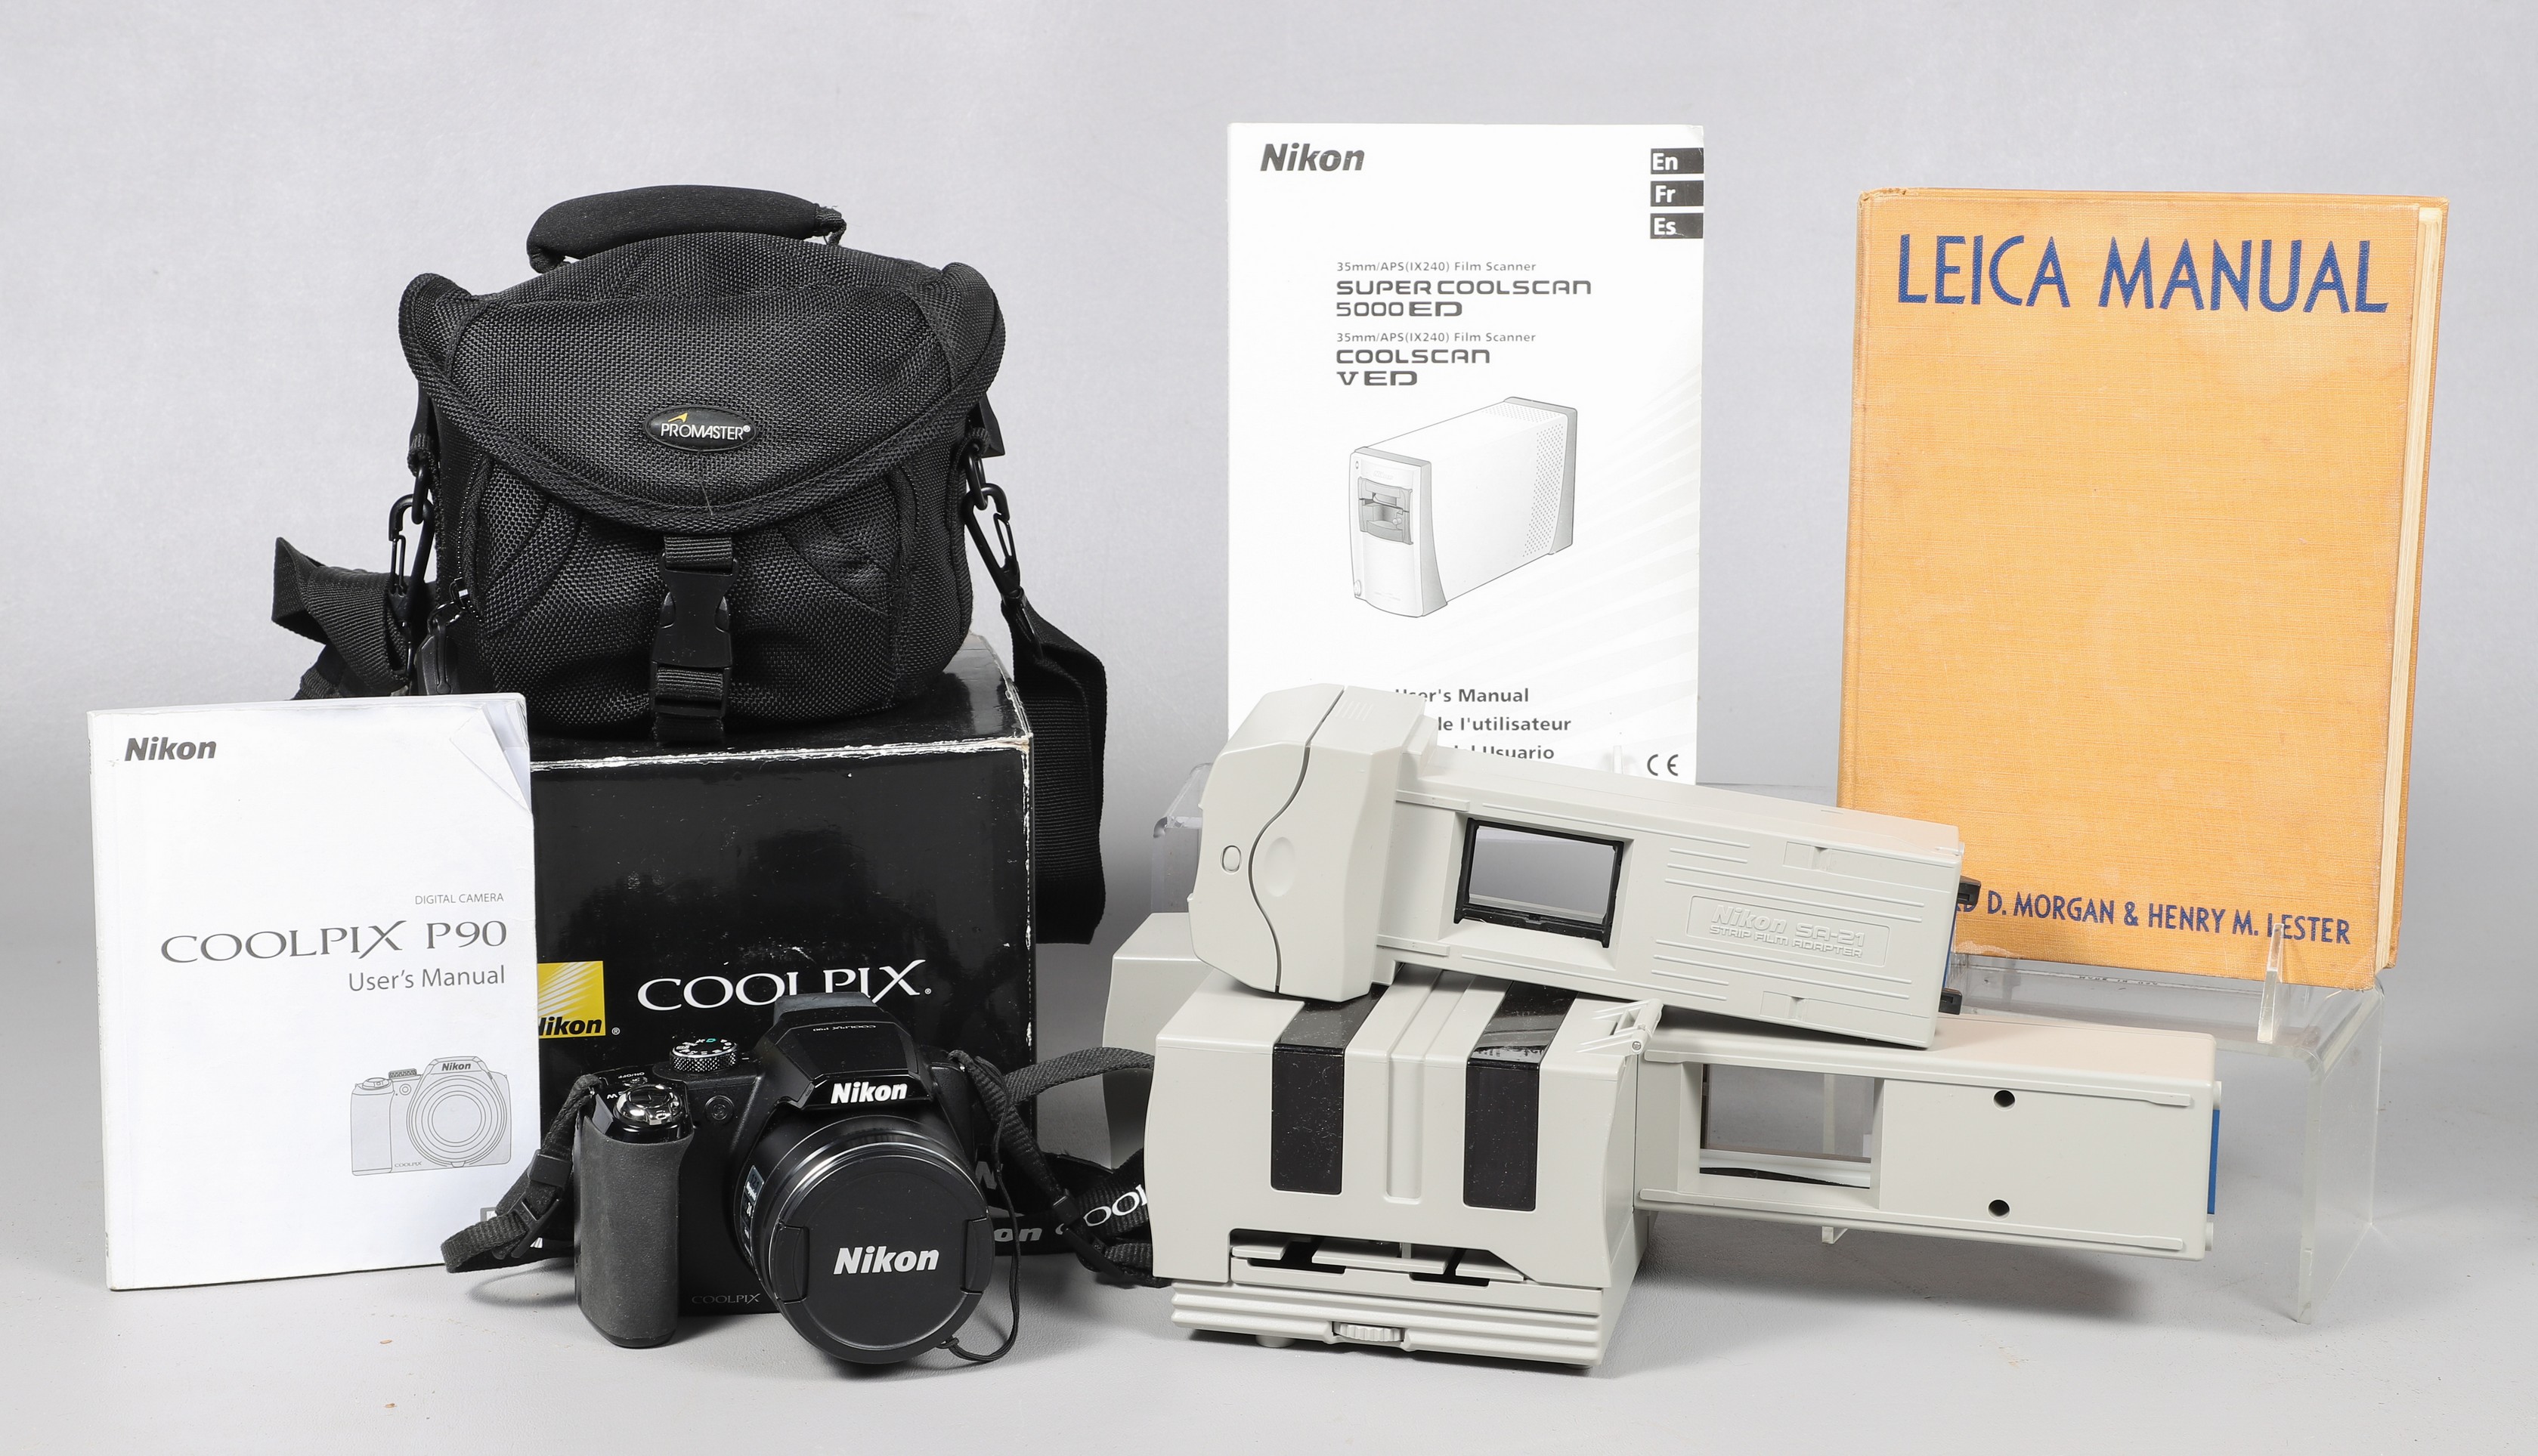 Lot of Nikon camera items, c/o Coolpix